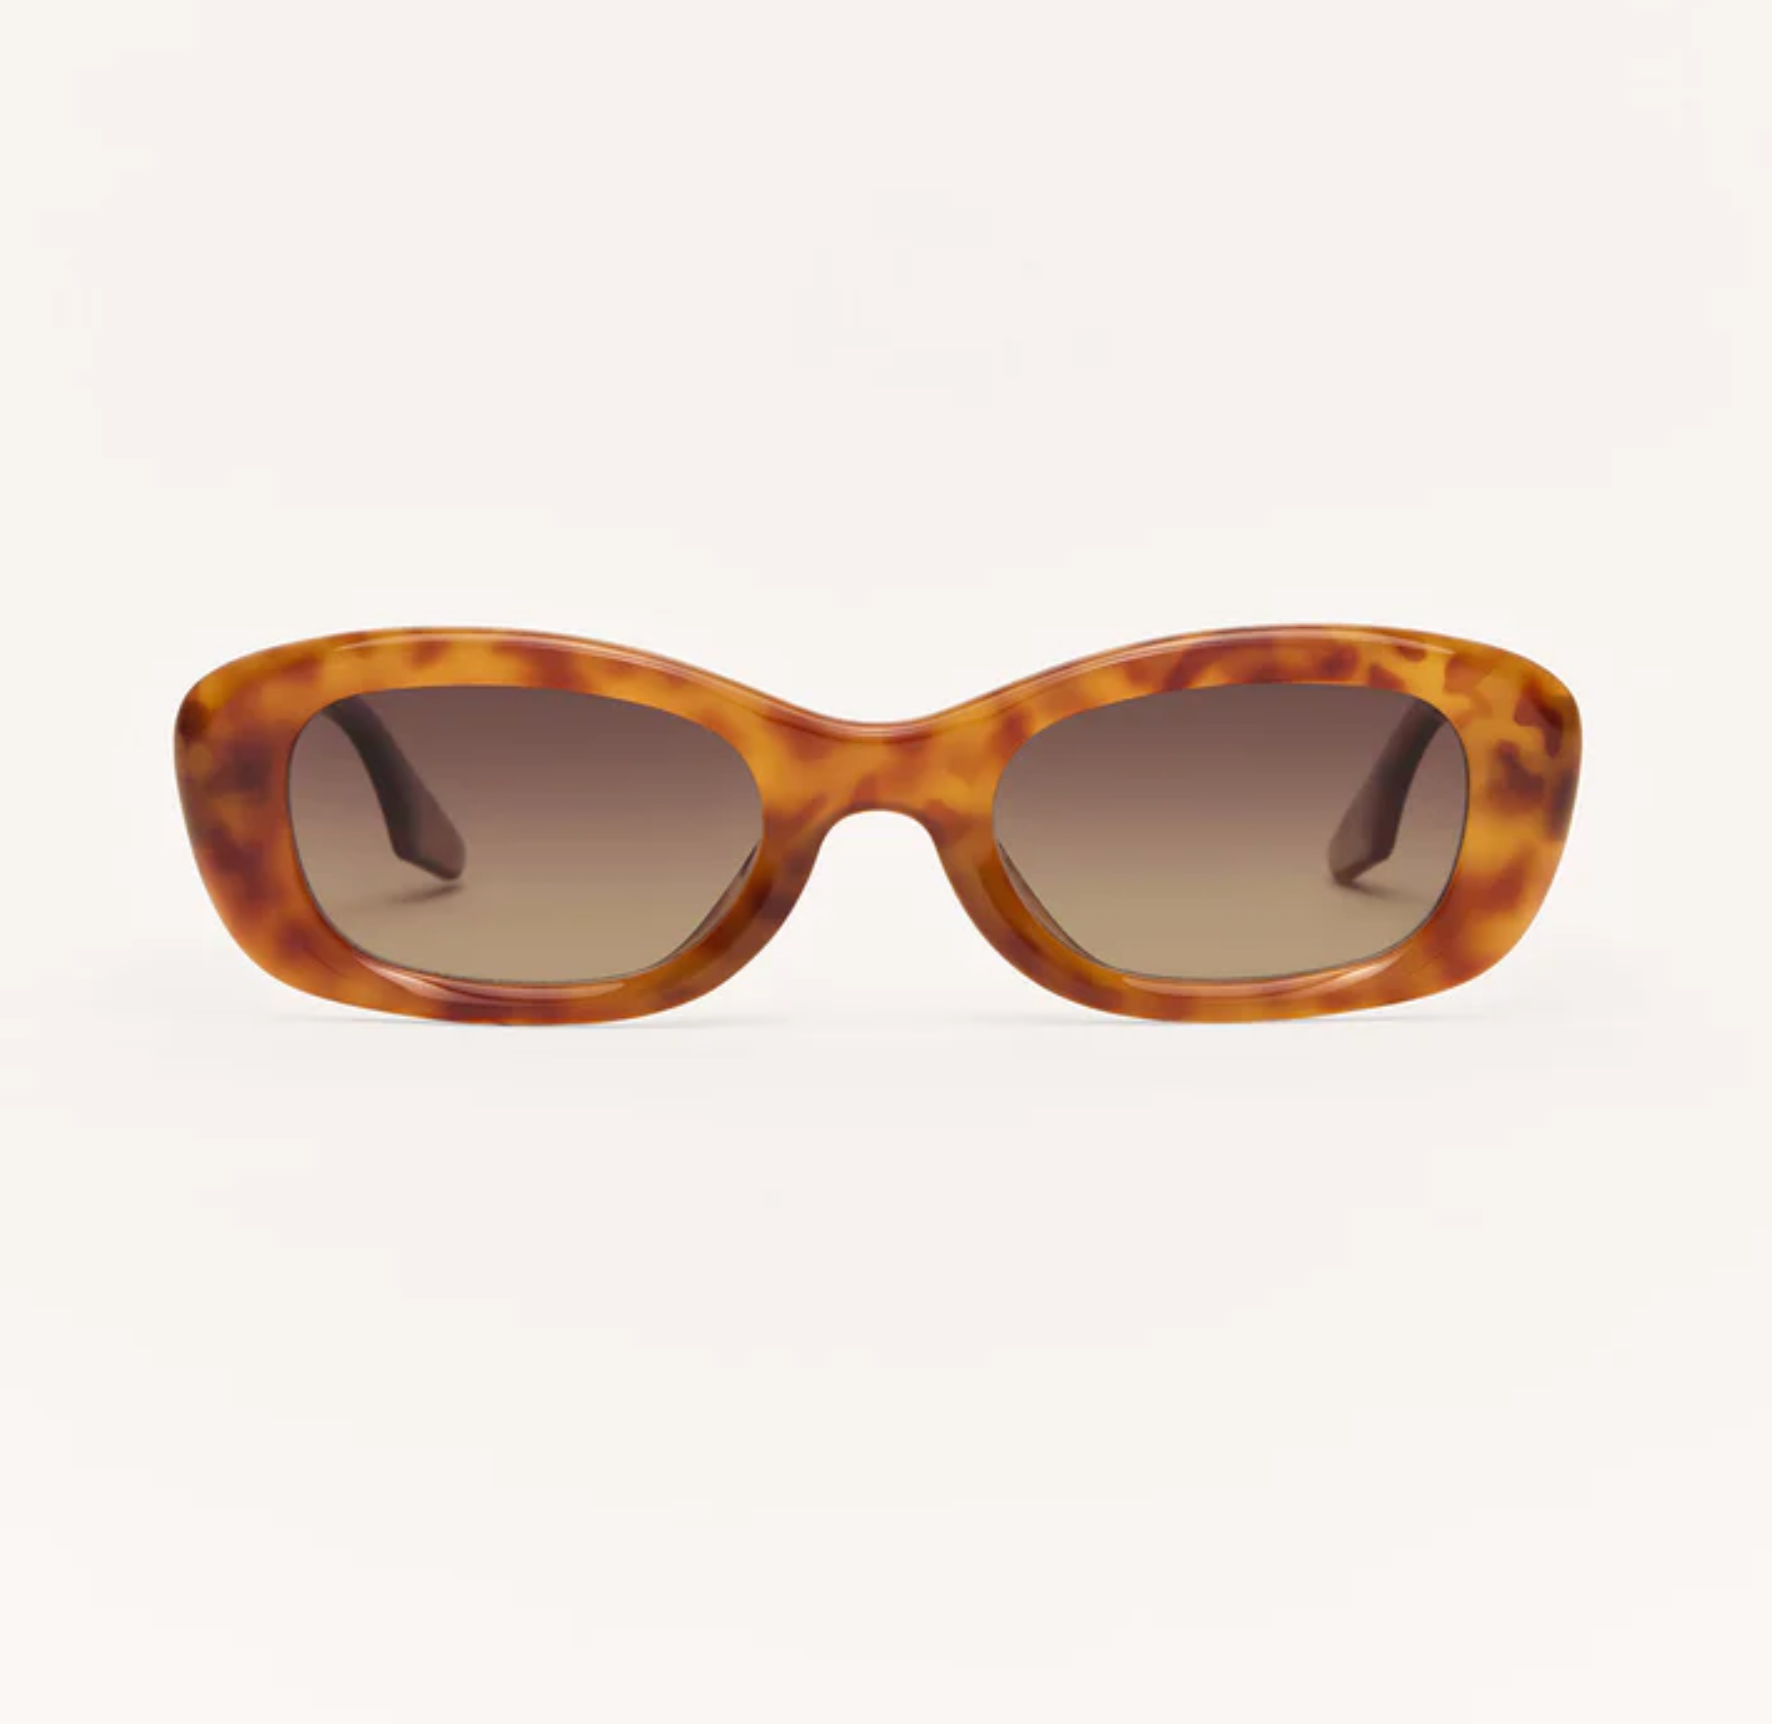 Joyride Sunglasses by Z Supply, Brown Tort